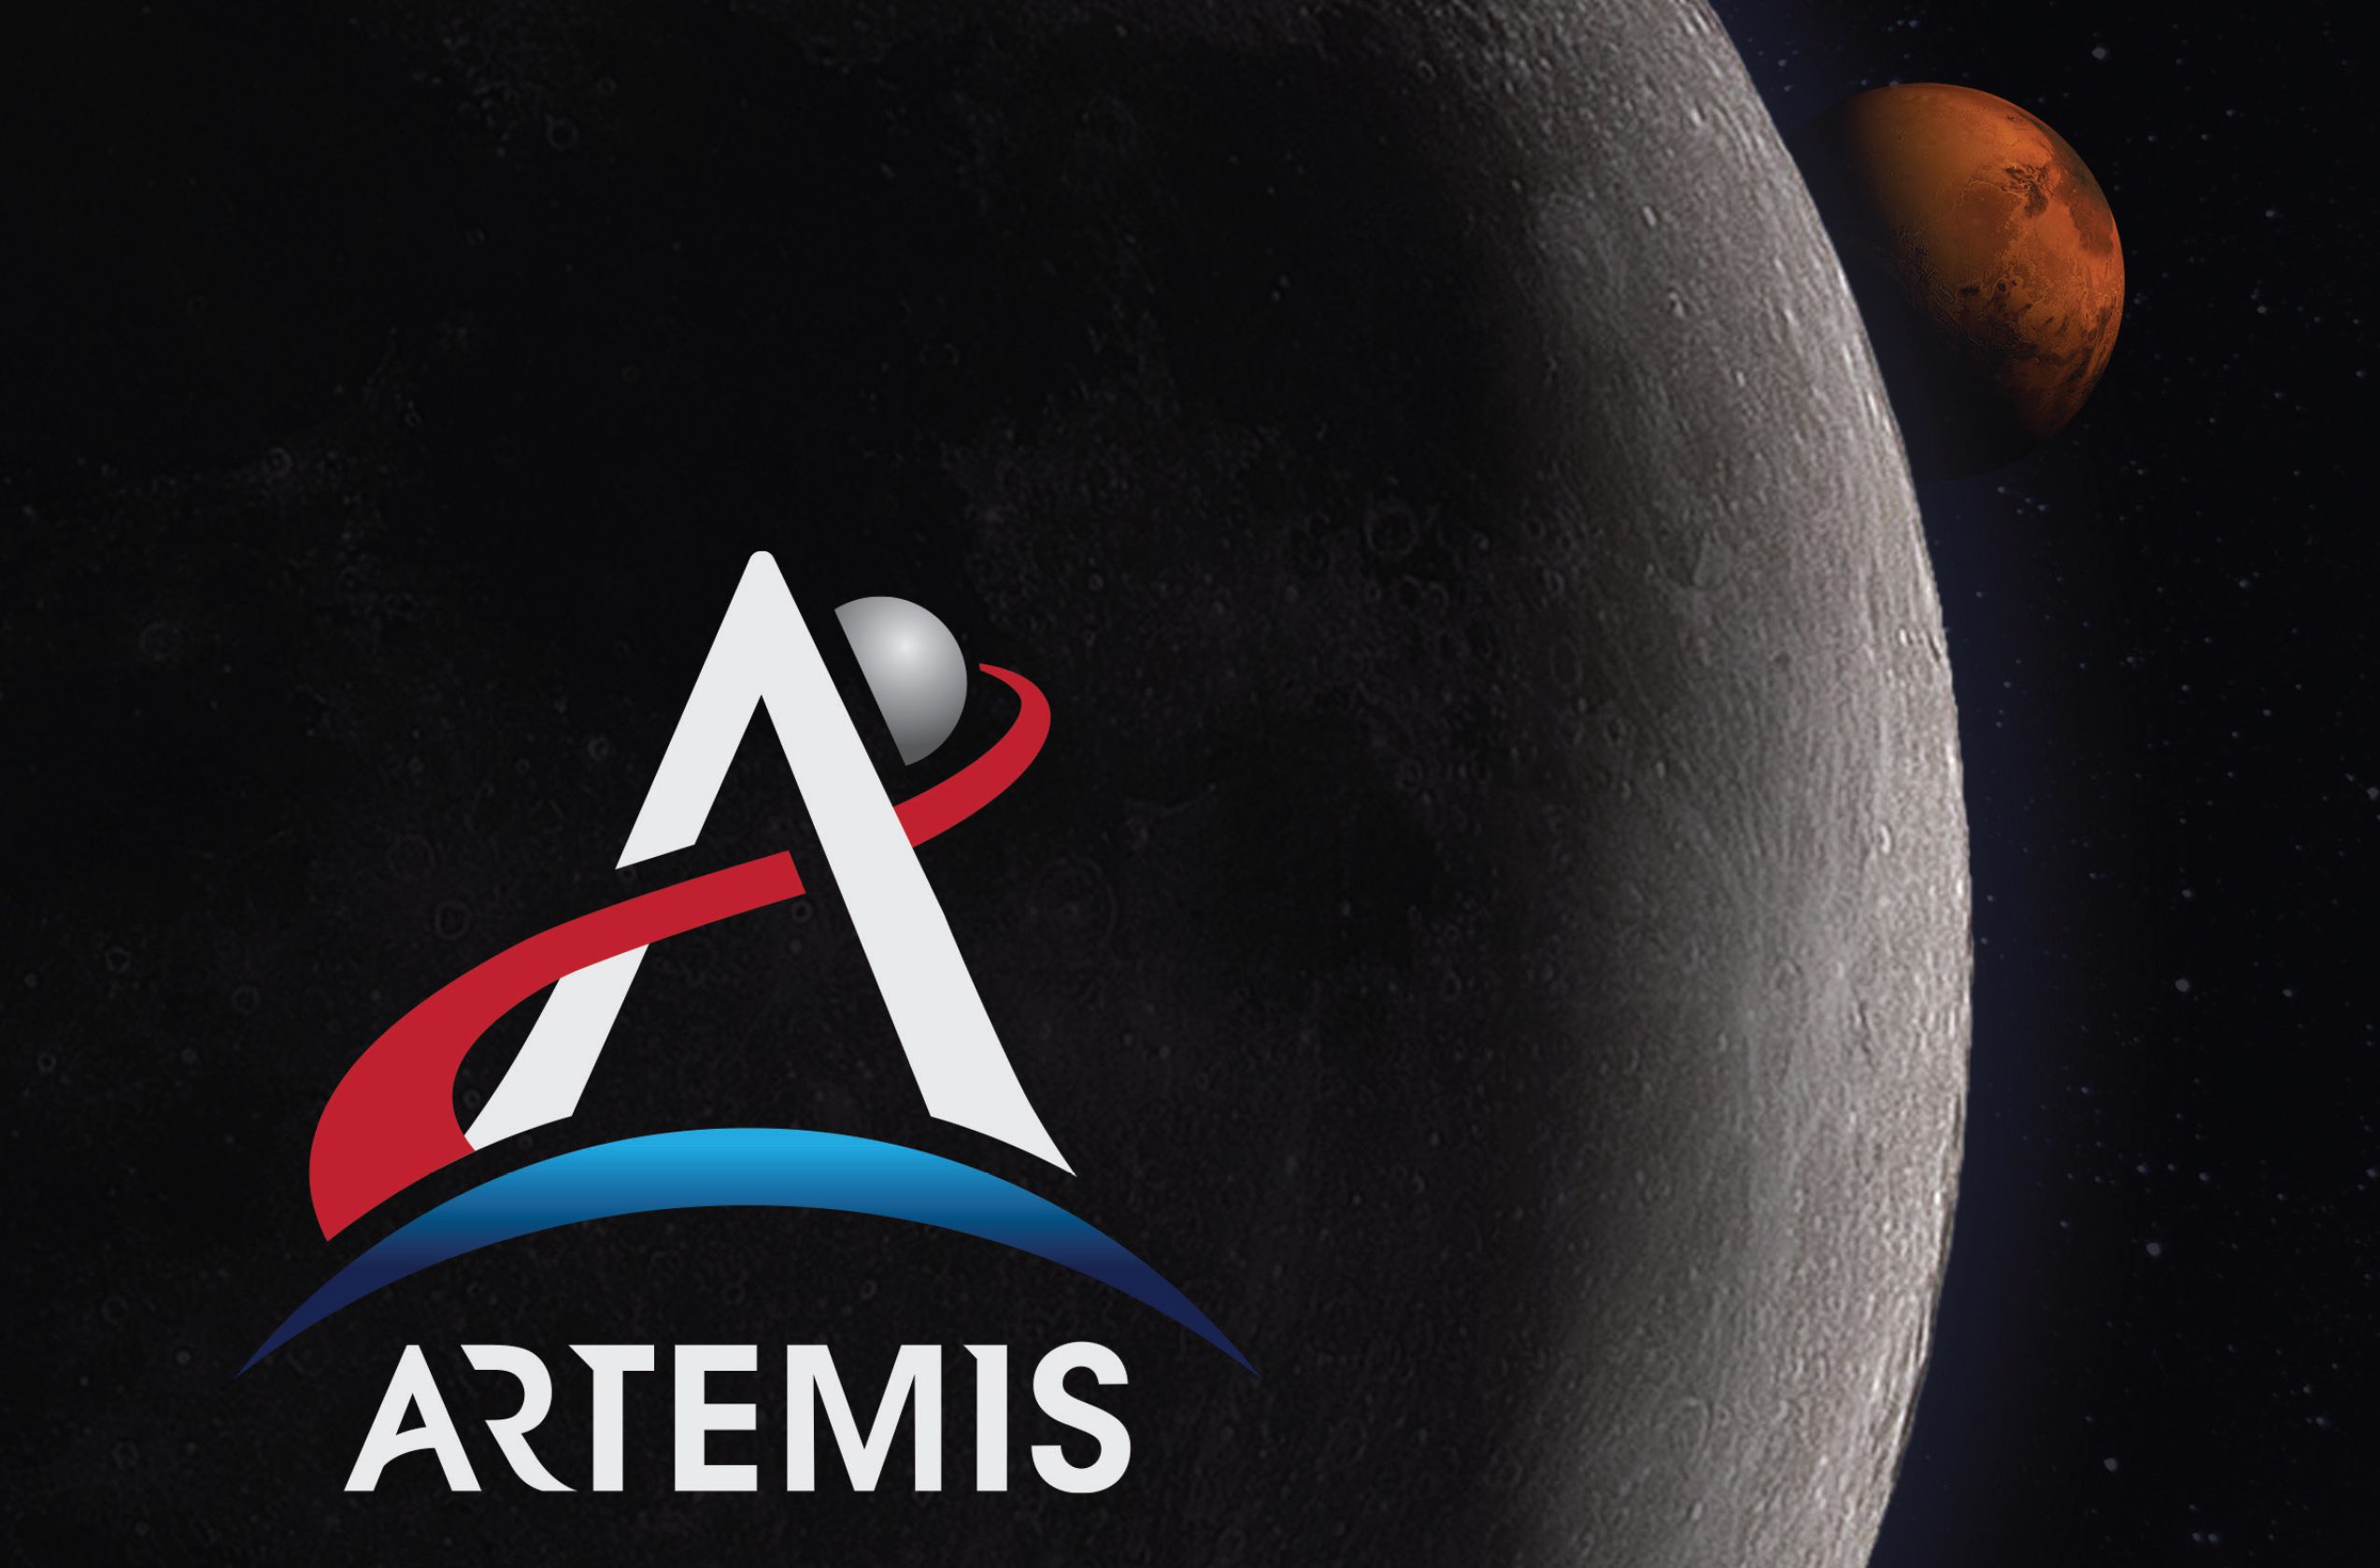 Raja Chari Indian-American Astronaut Is In NASA’s Artemis Programme - Infomance